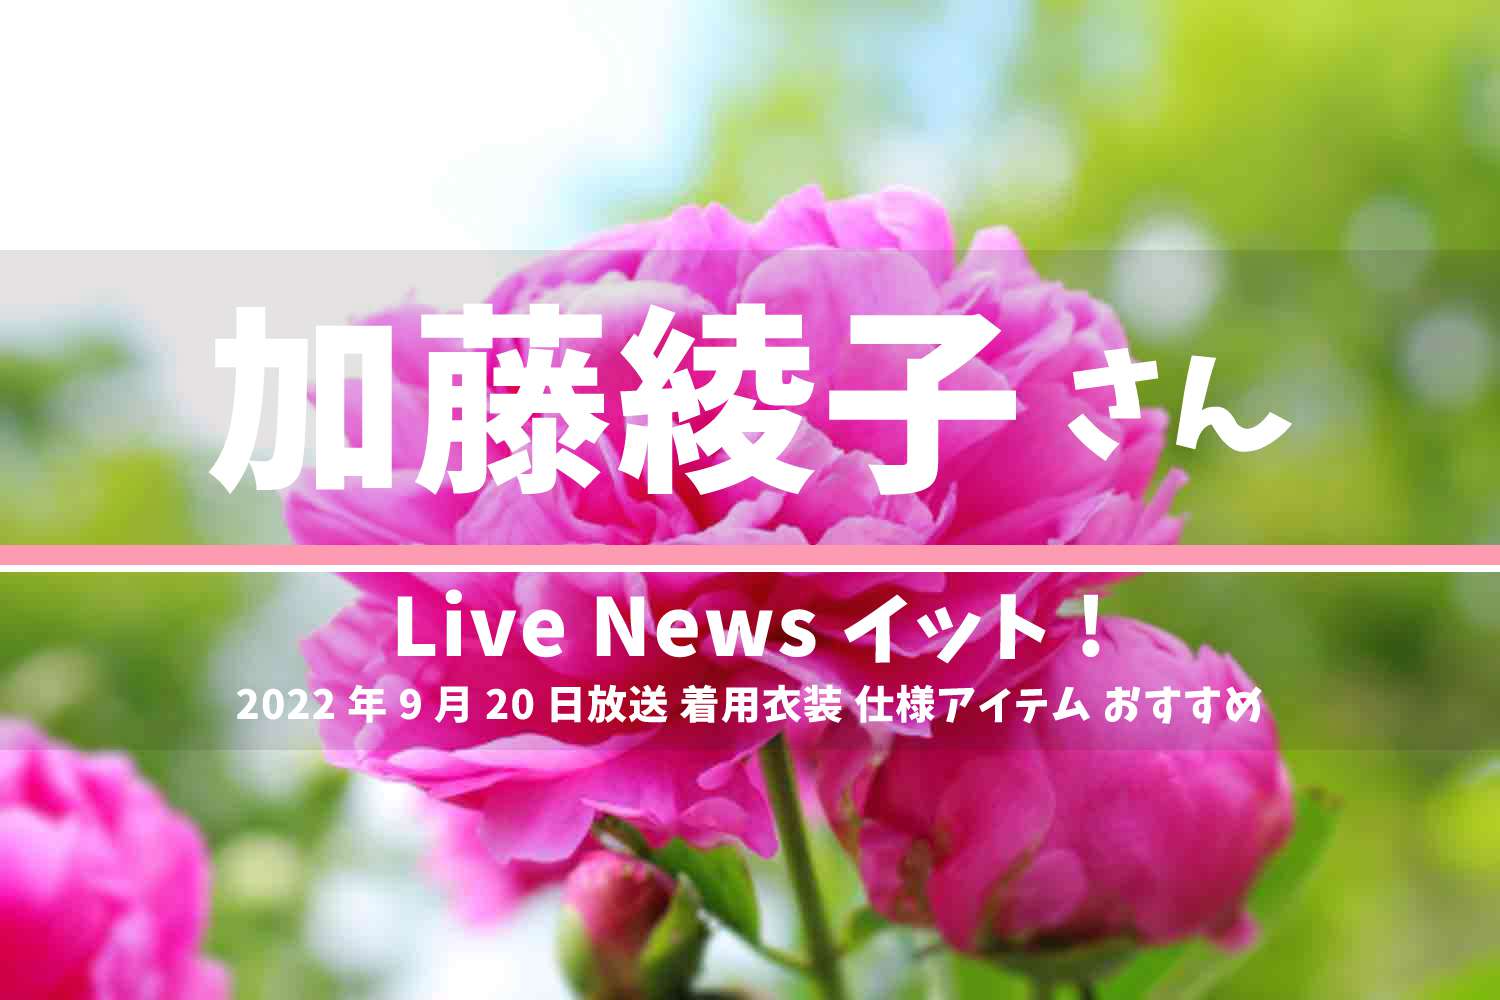 Live News イット! 加藤綾子さん 番組 衣装 2022年9月20日放送